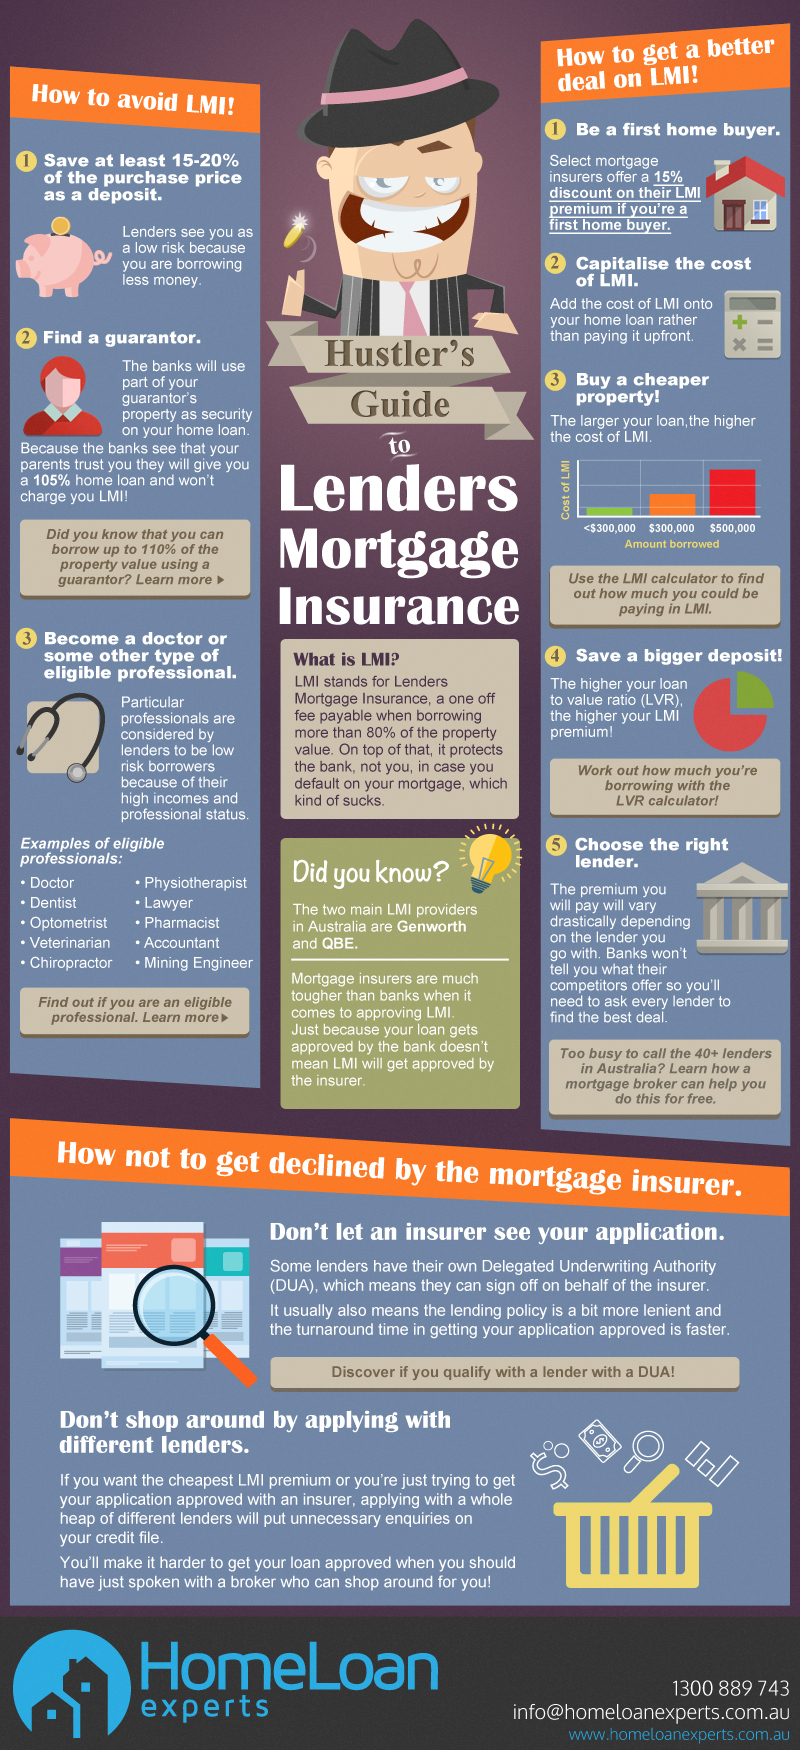 hustlers guide to lenders mortgage insurance